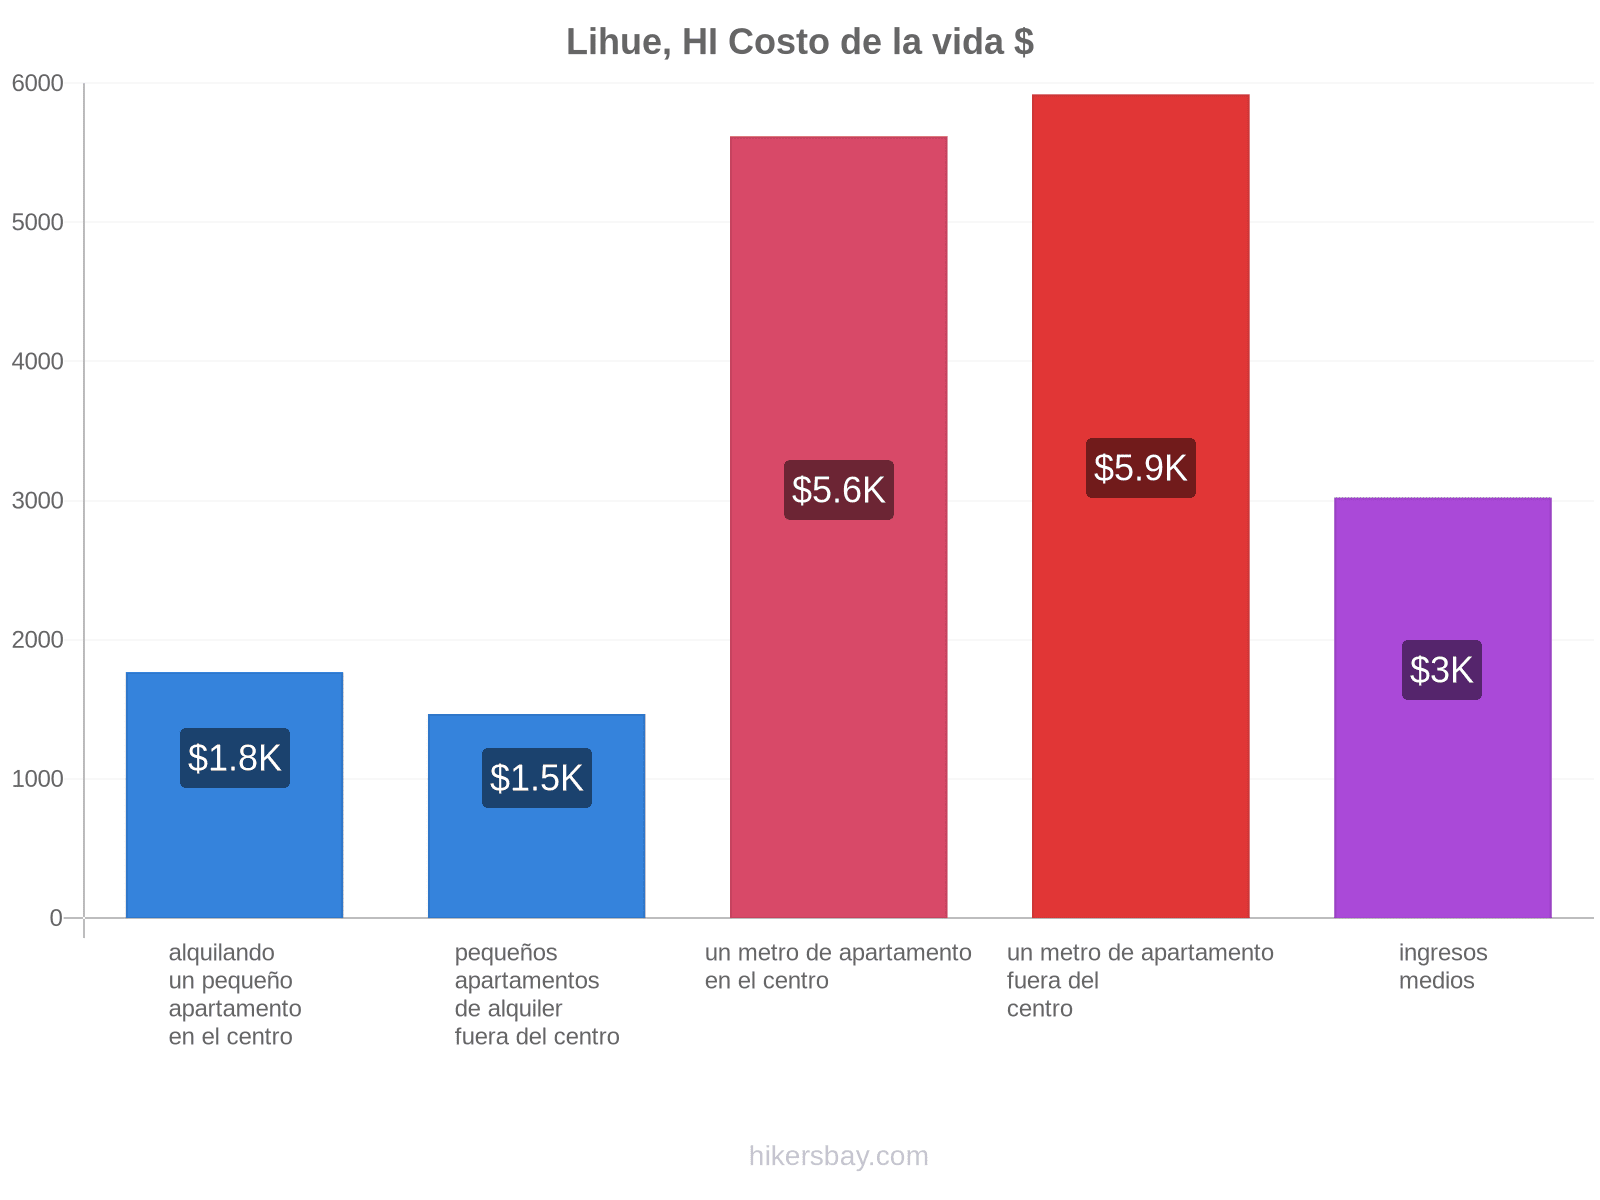 Lihue, HI costo de la vida hikersbay.com